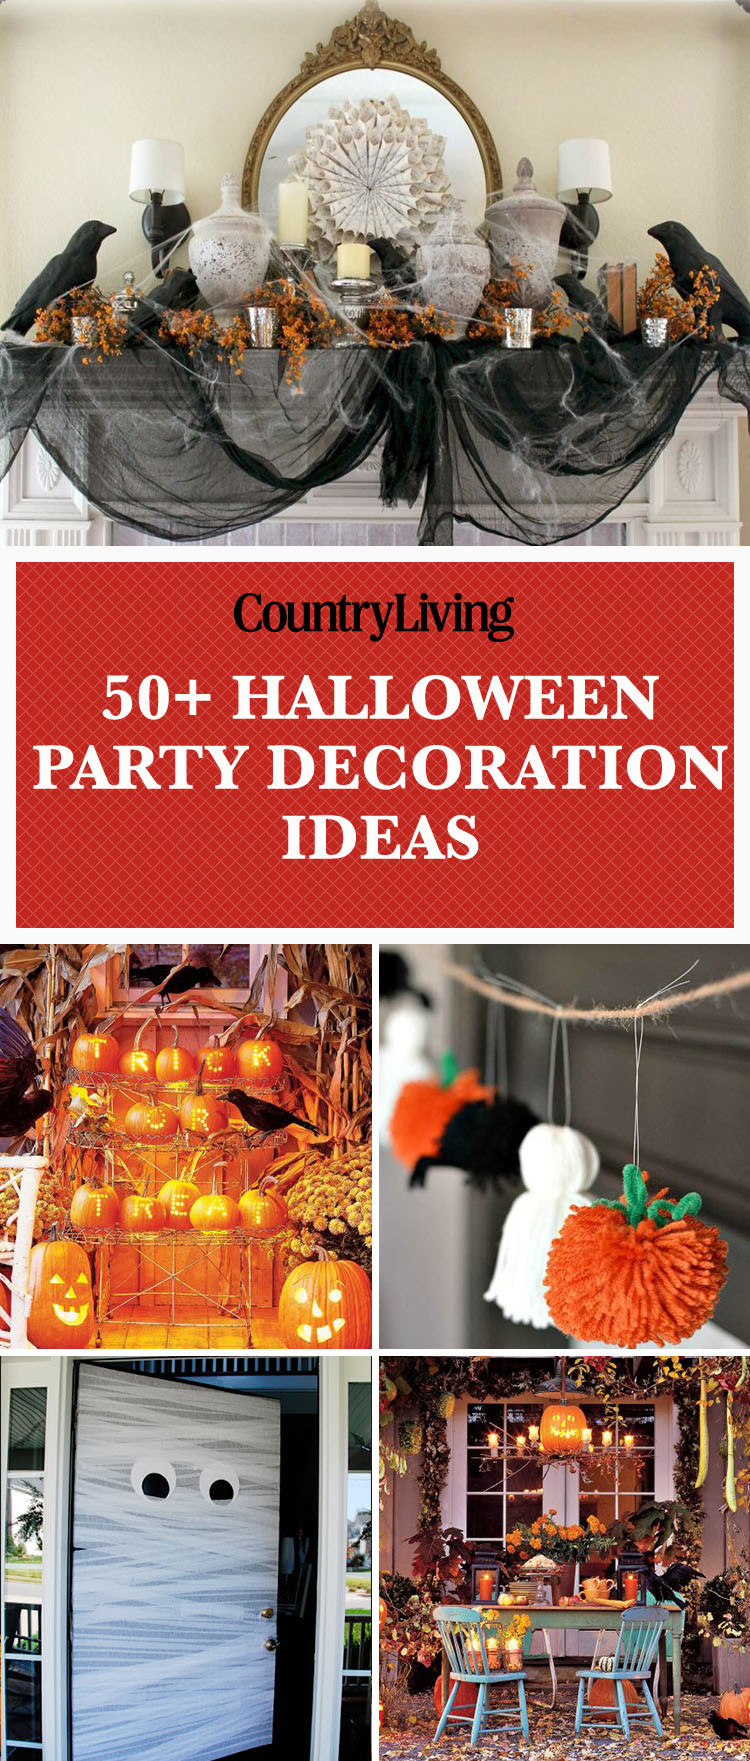 Halloween Party Theme Ideas
 56 Fun Halloween Party Decorating Ideas Spooky Halloween